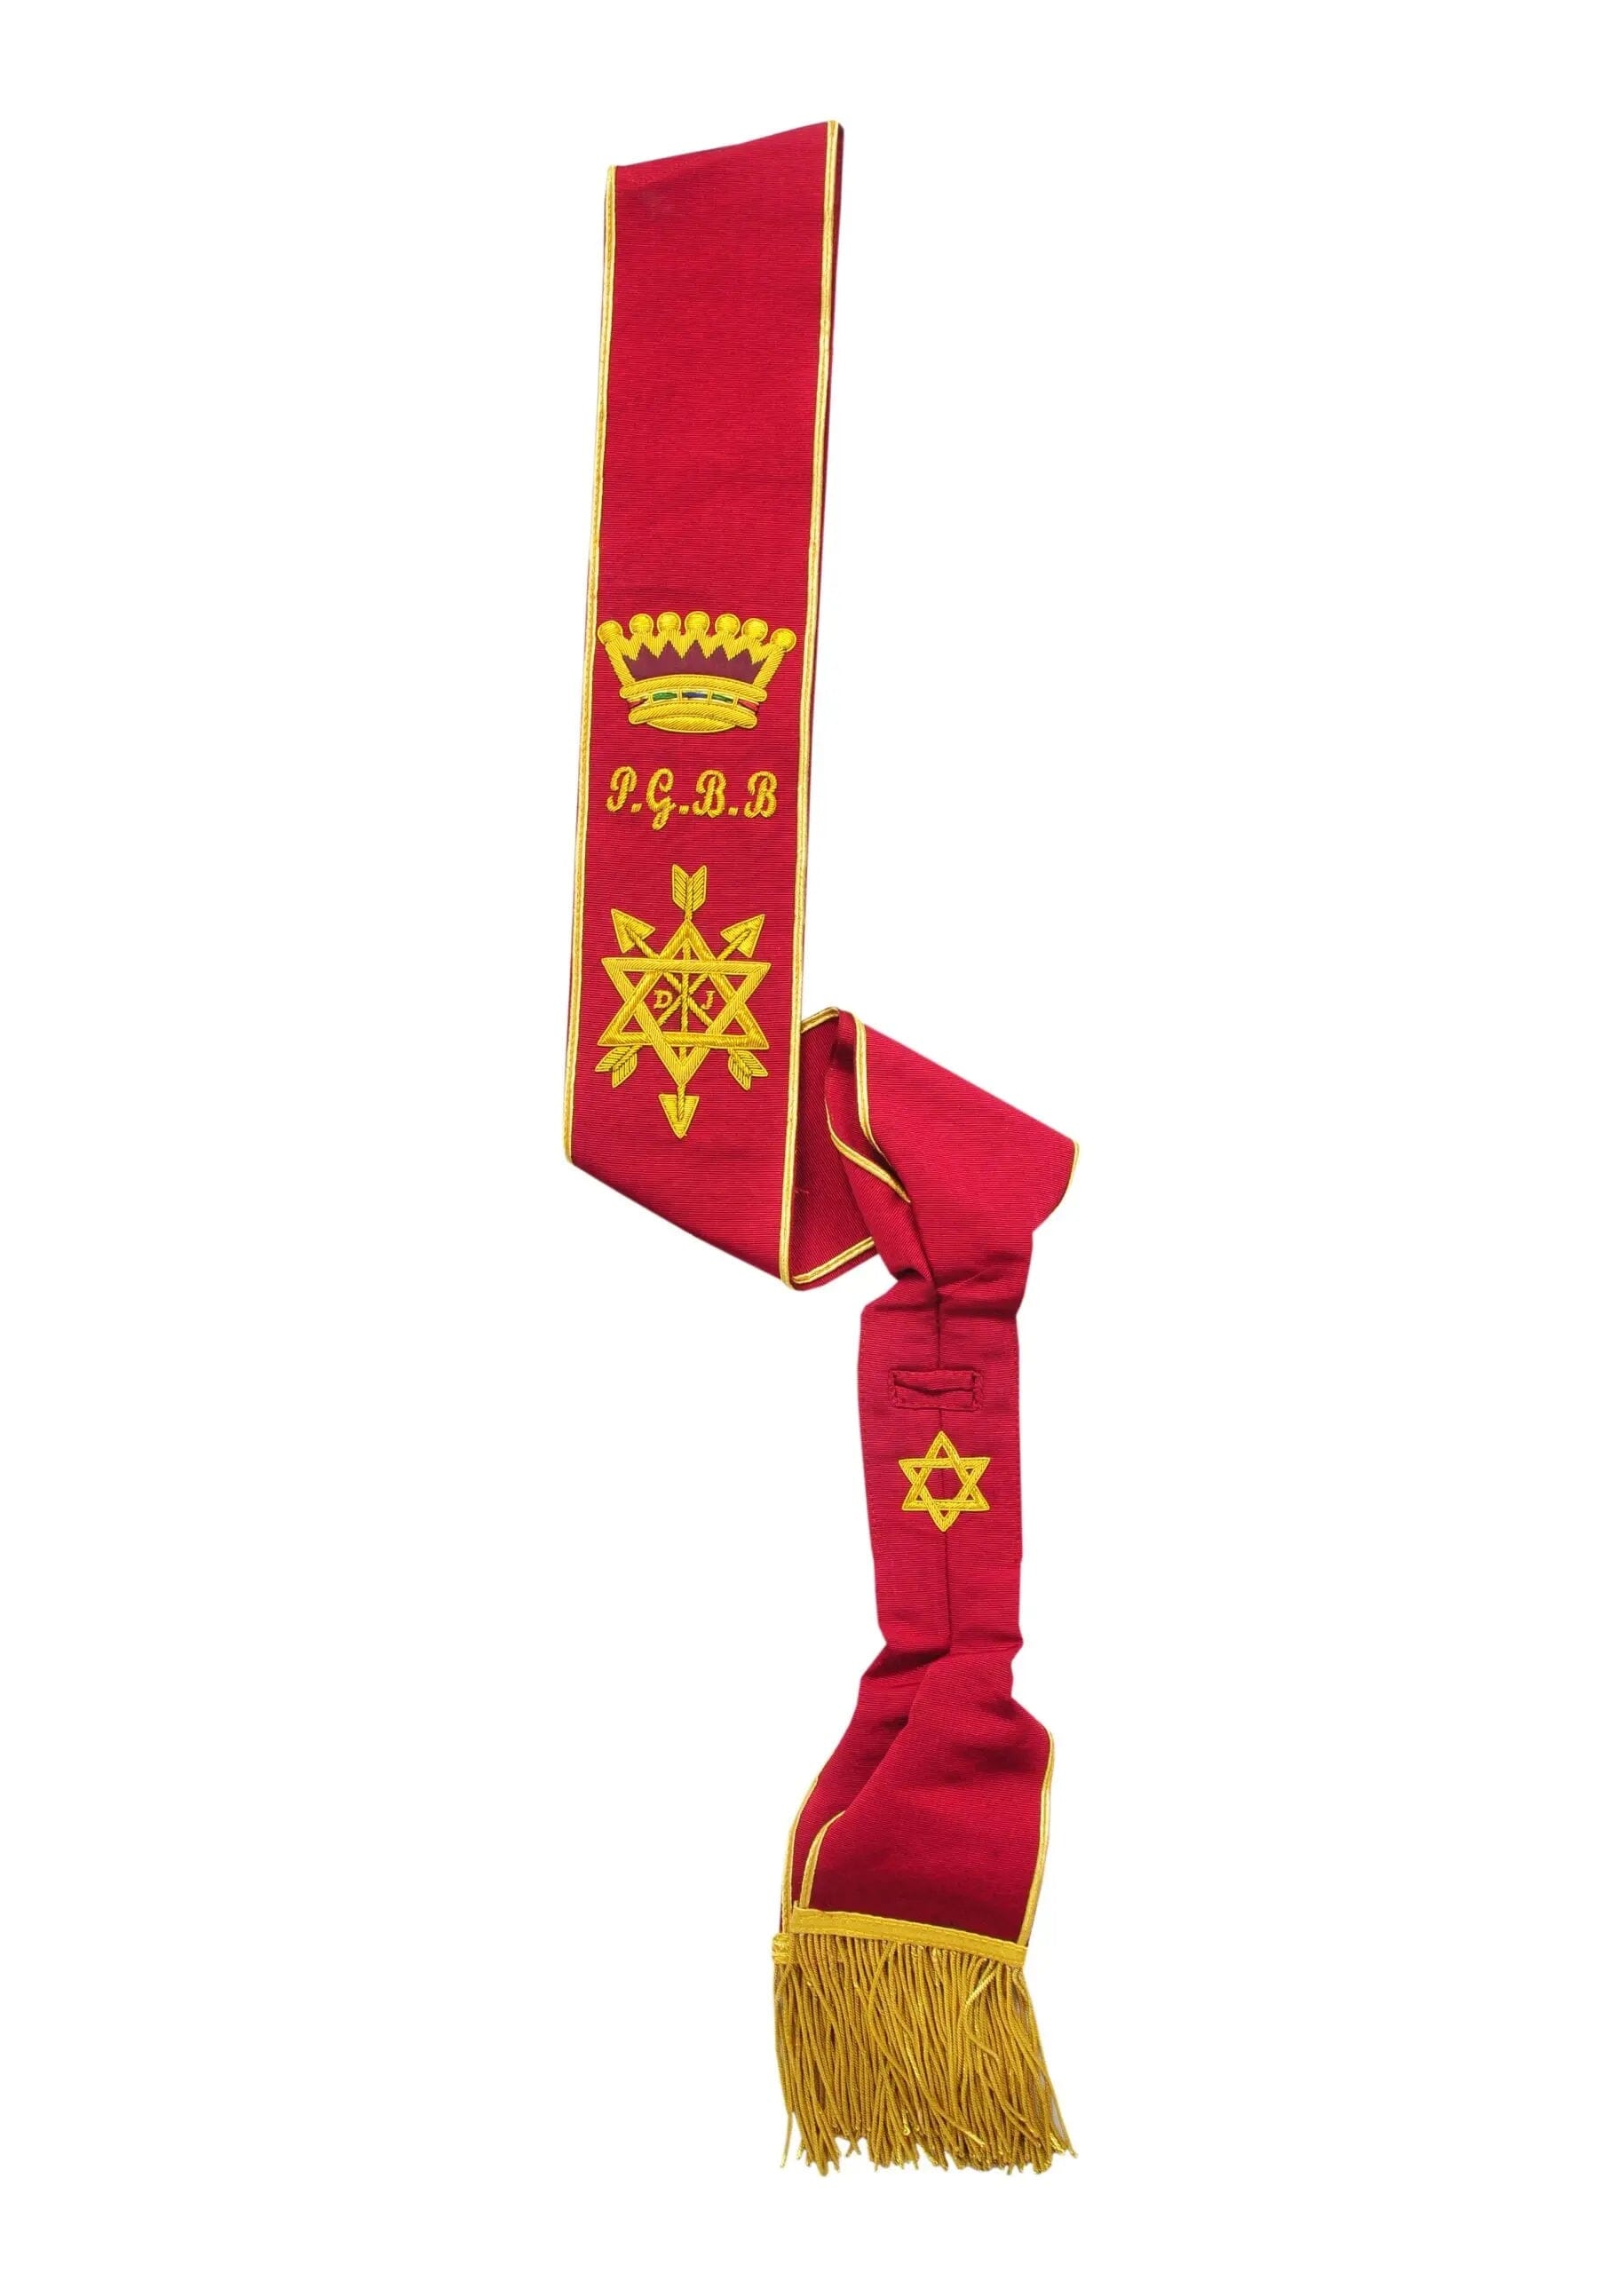 Unlined Order of Amaranth Officer's Sash moire ribbon